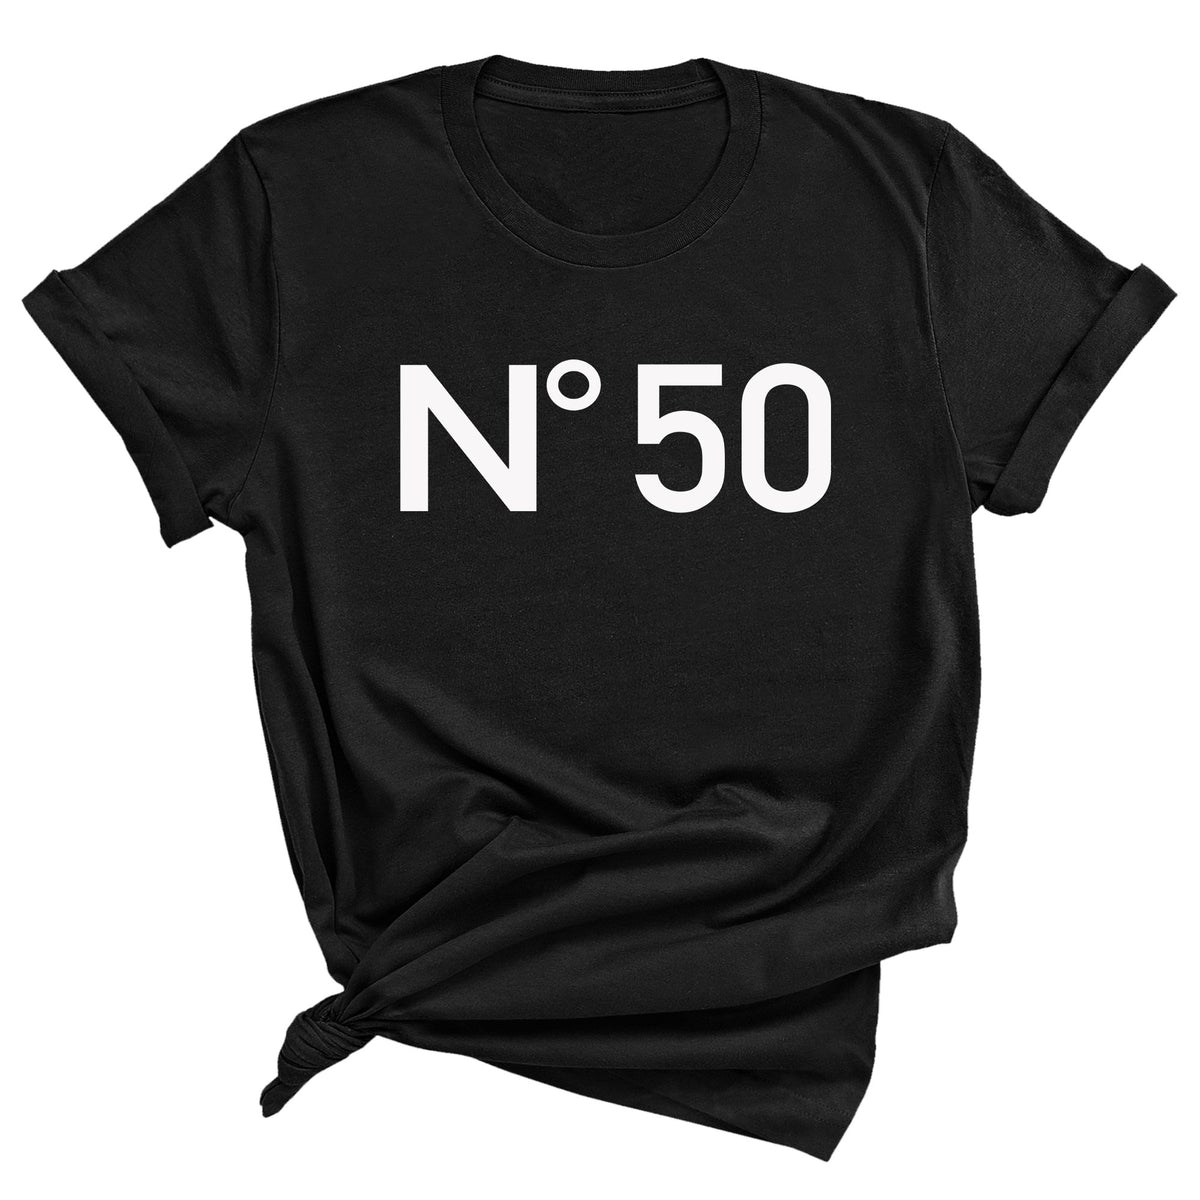 No. 50 Unisex T-Shirt